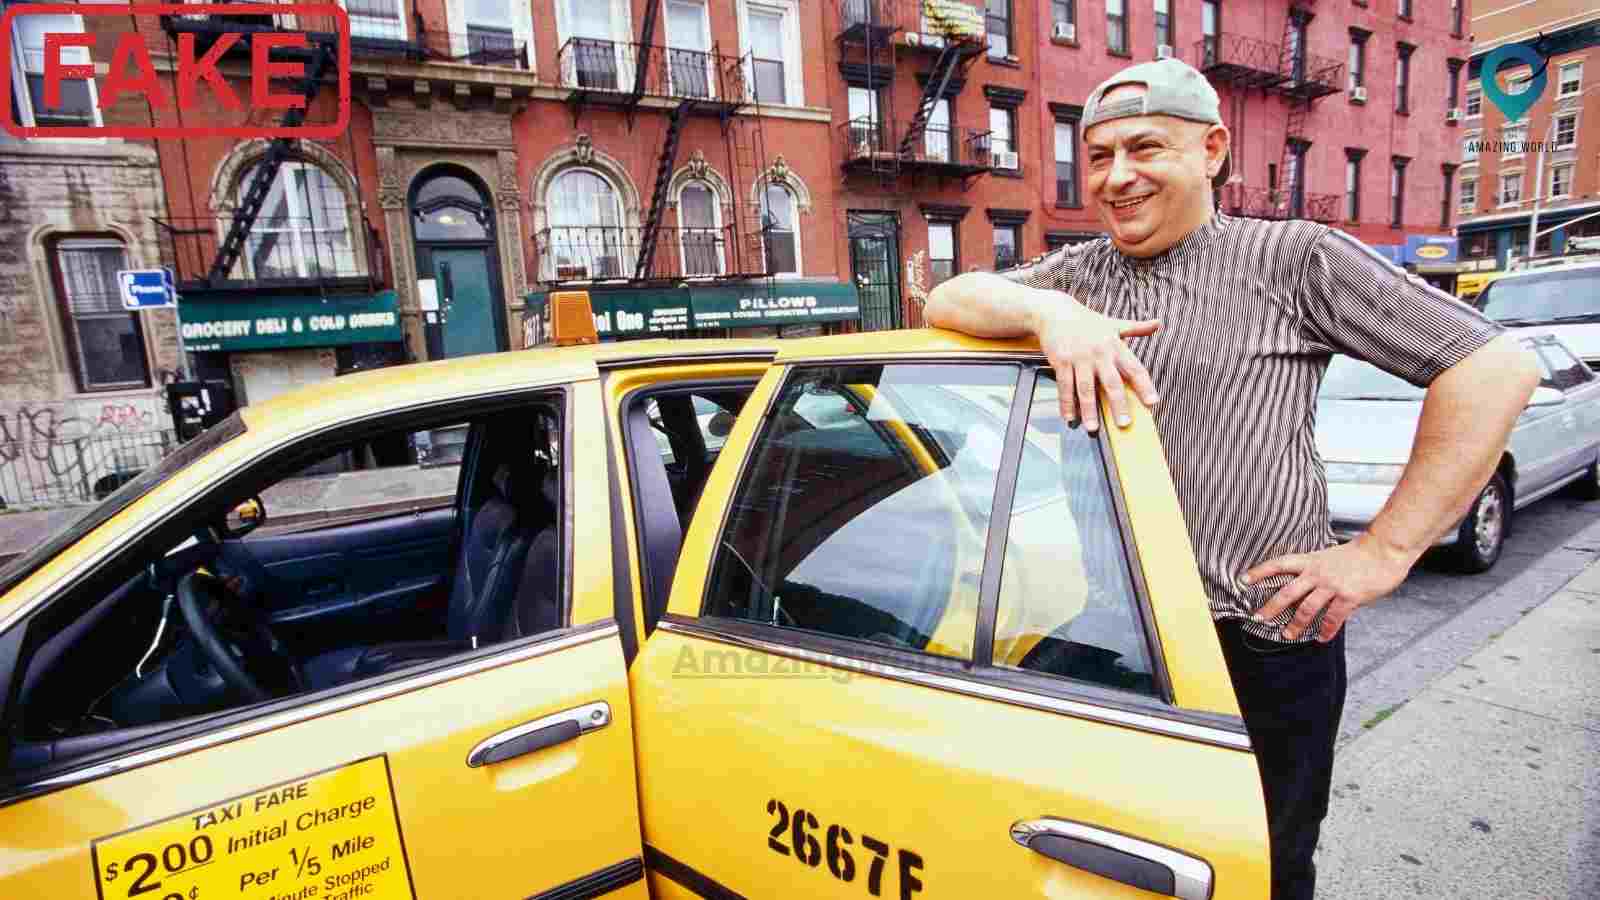 david hamill recommends Fake Taxi Cab Driver